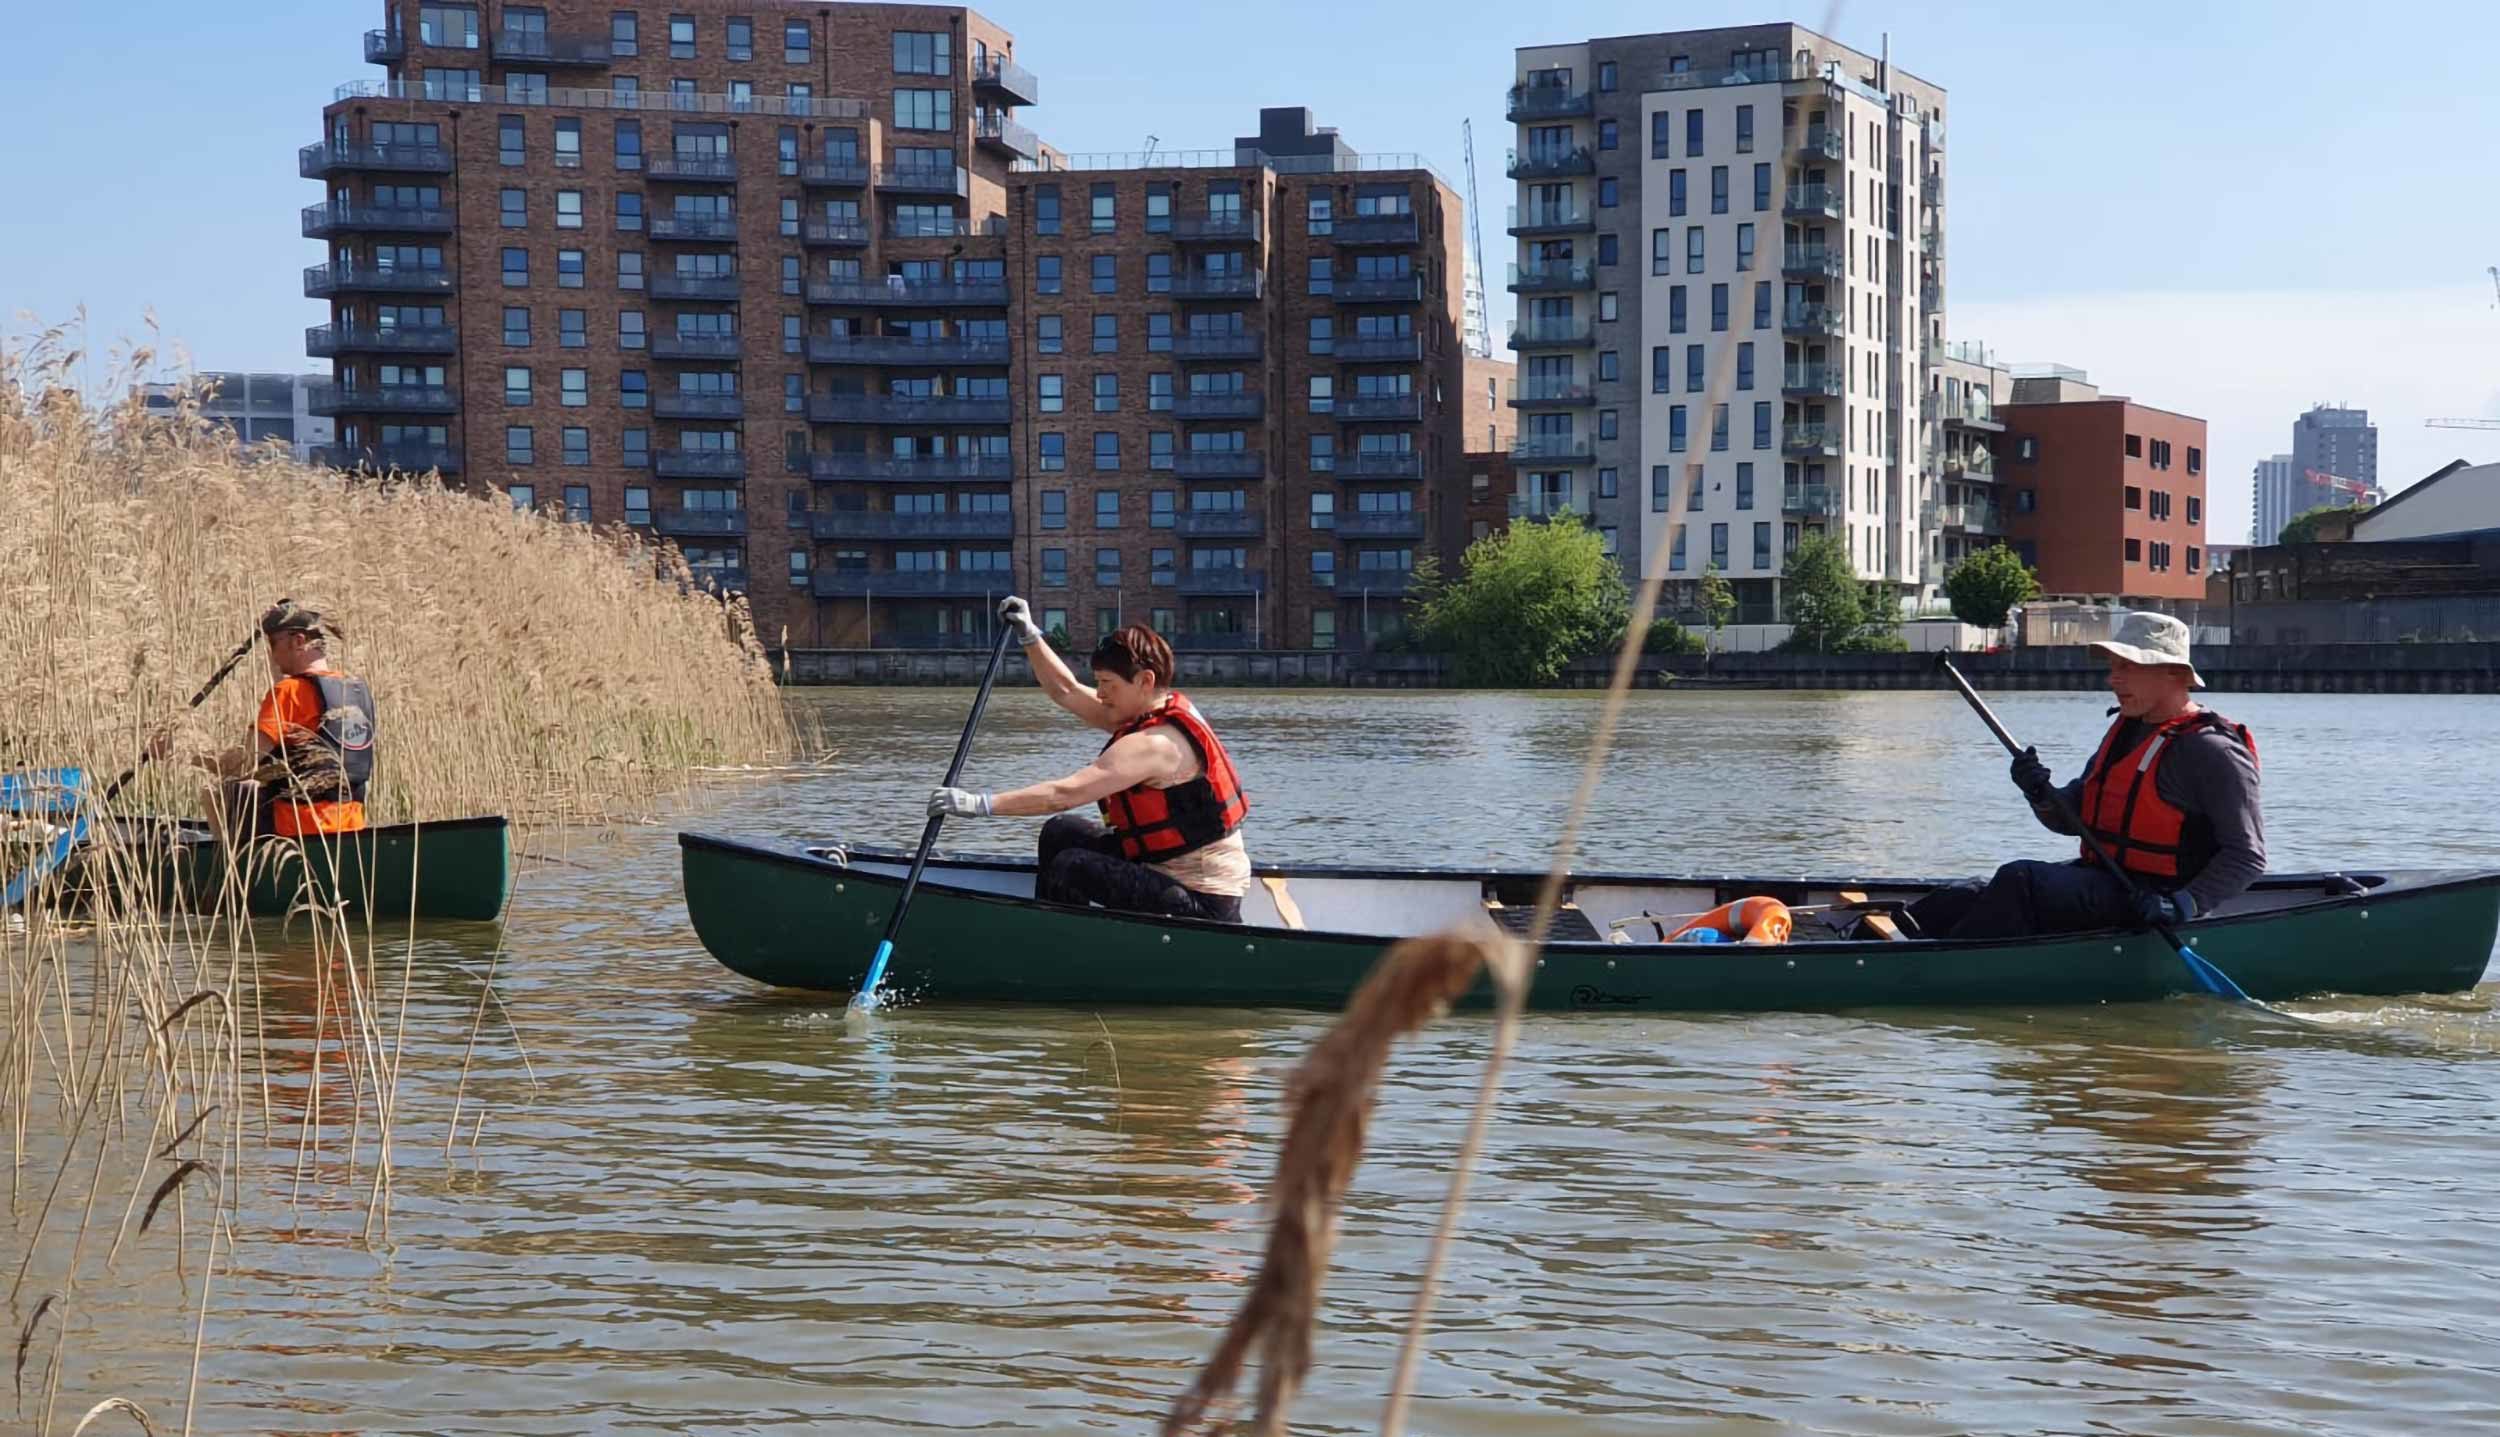 volunteers canoeing into reeds next to blocks of flats